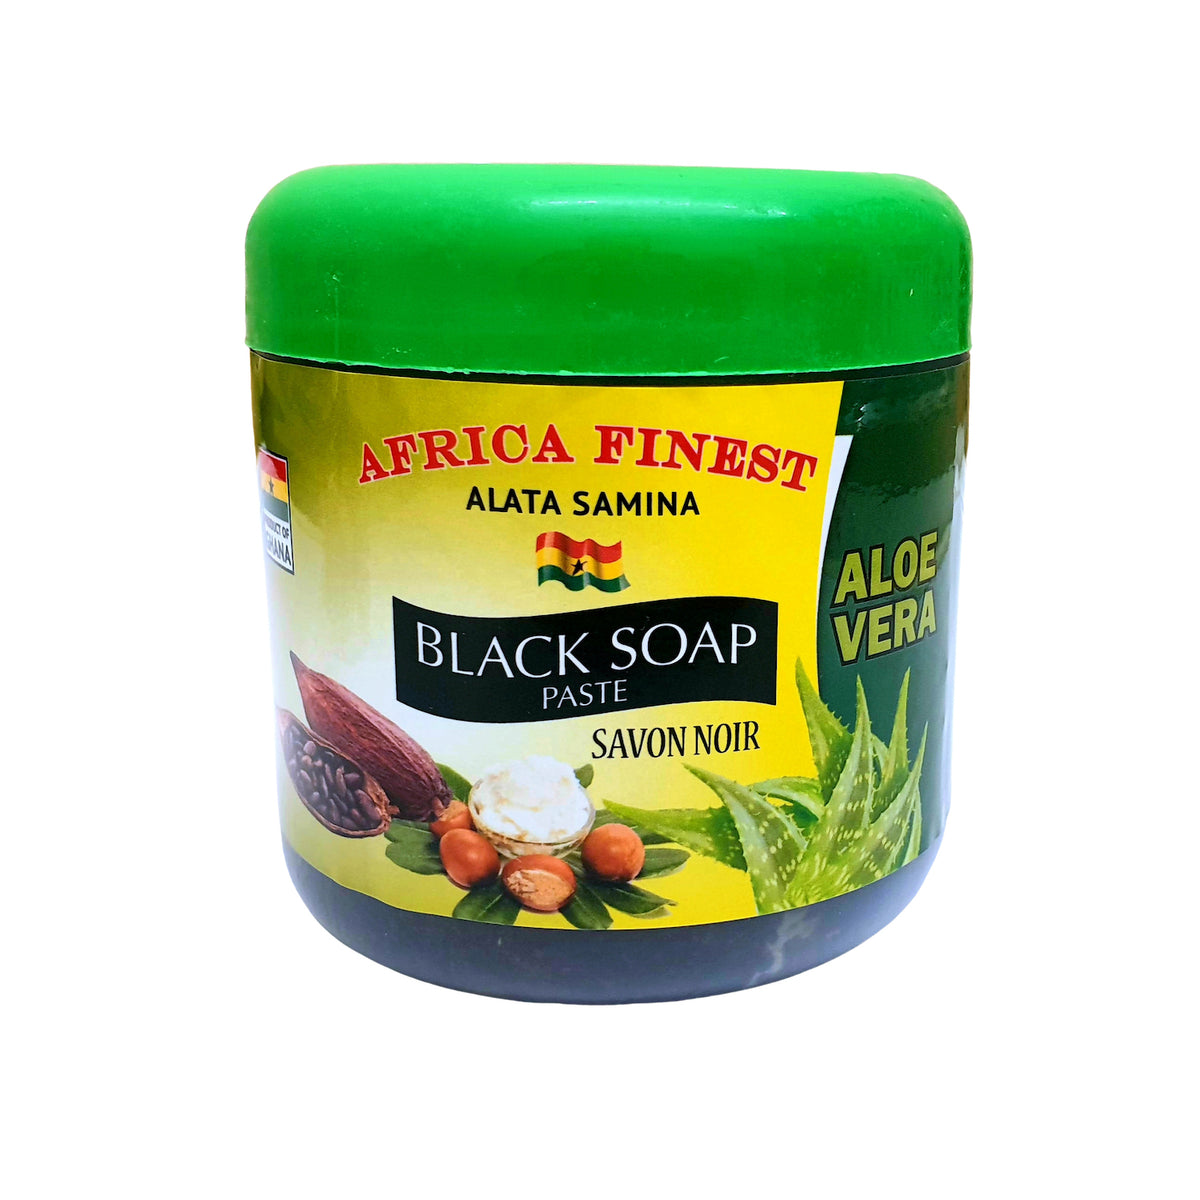 Shea Cocoa Project - Africa Finest - Black Soap Paste